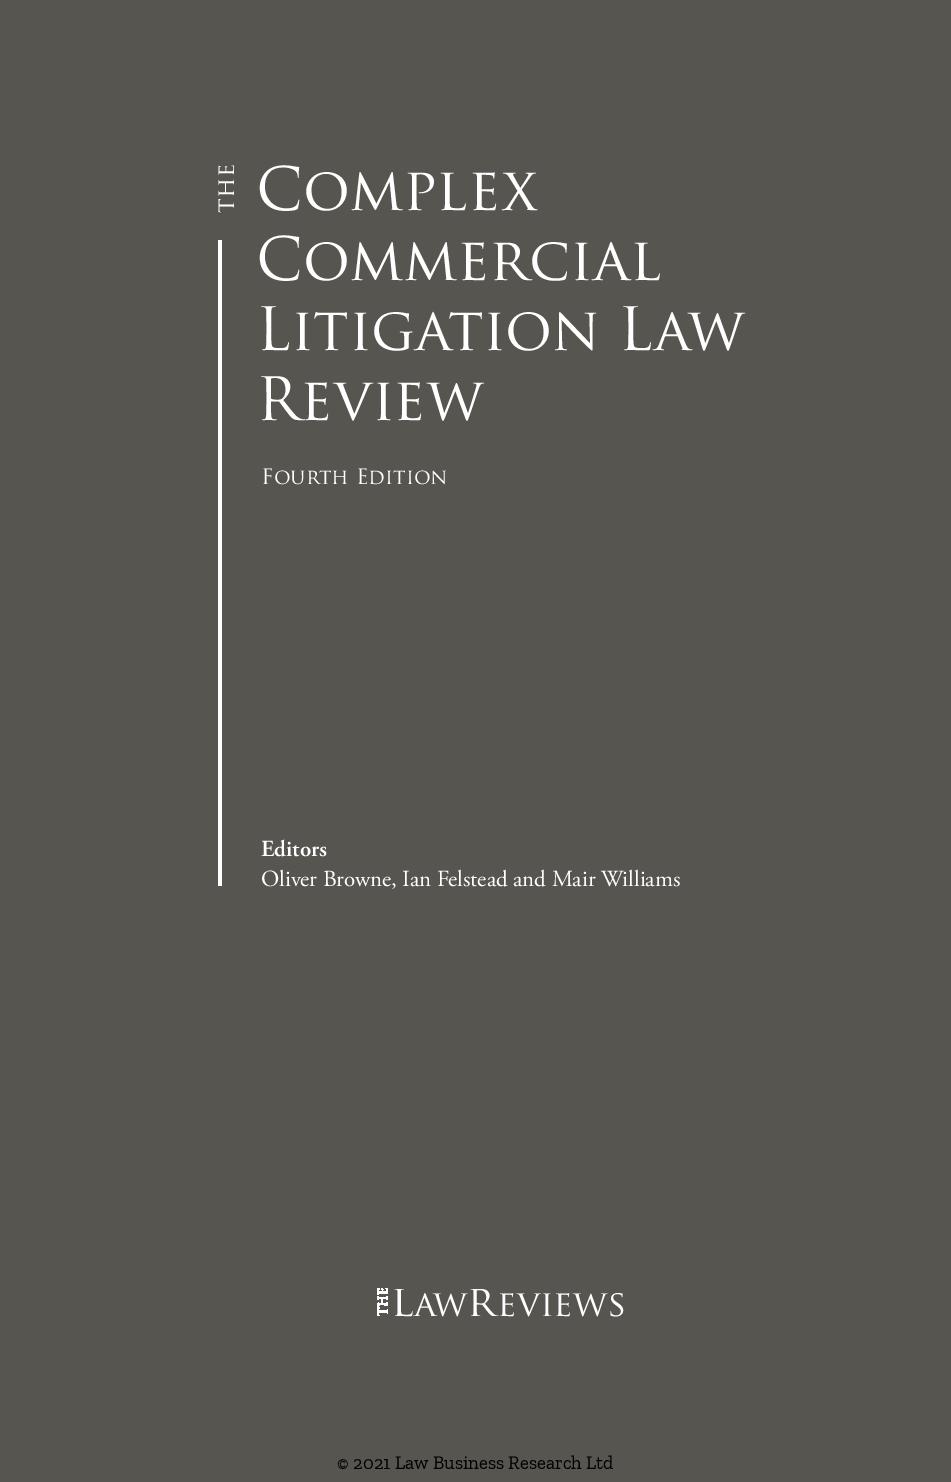 The Complex Commercial Litigation Law Review